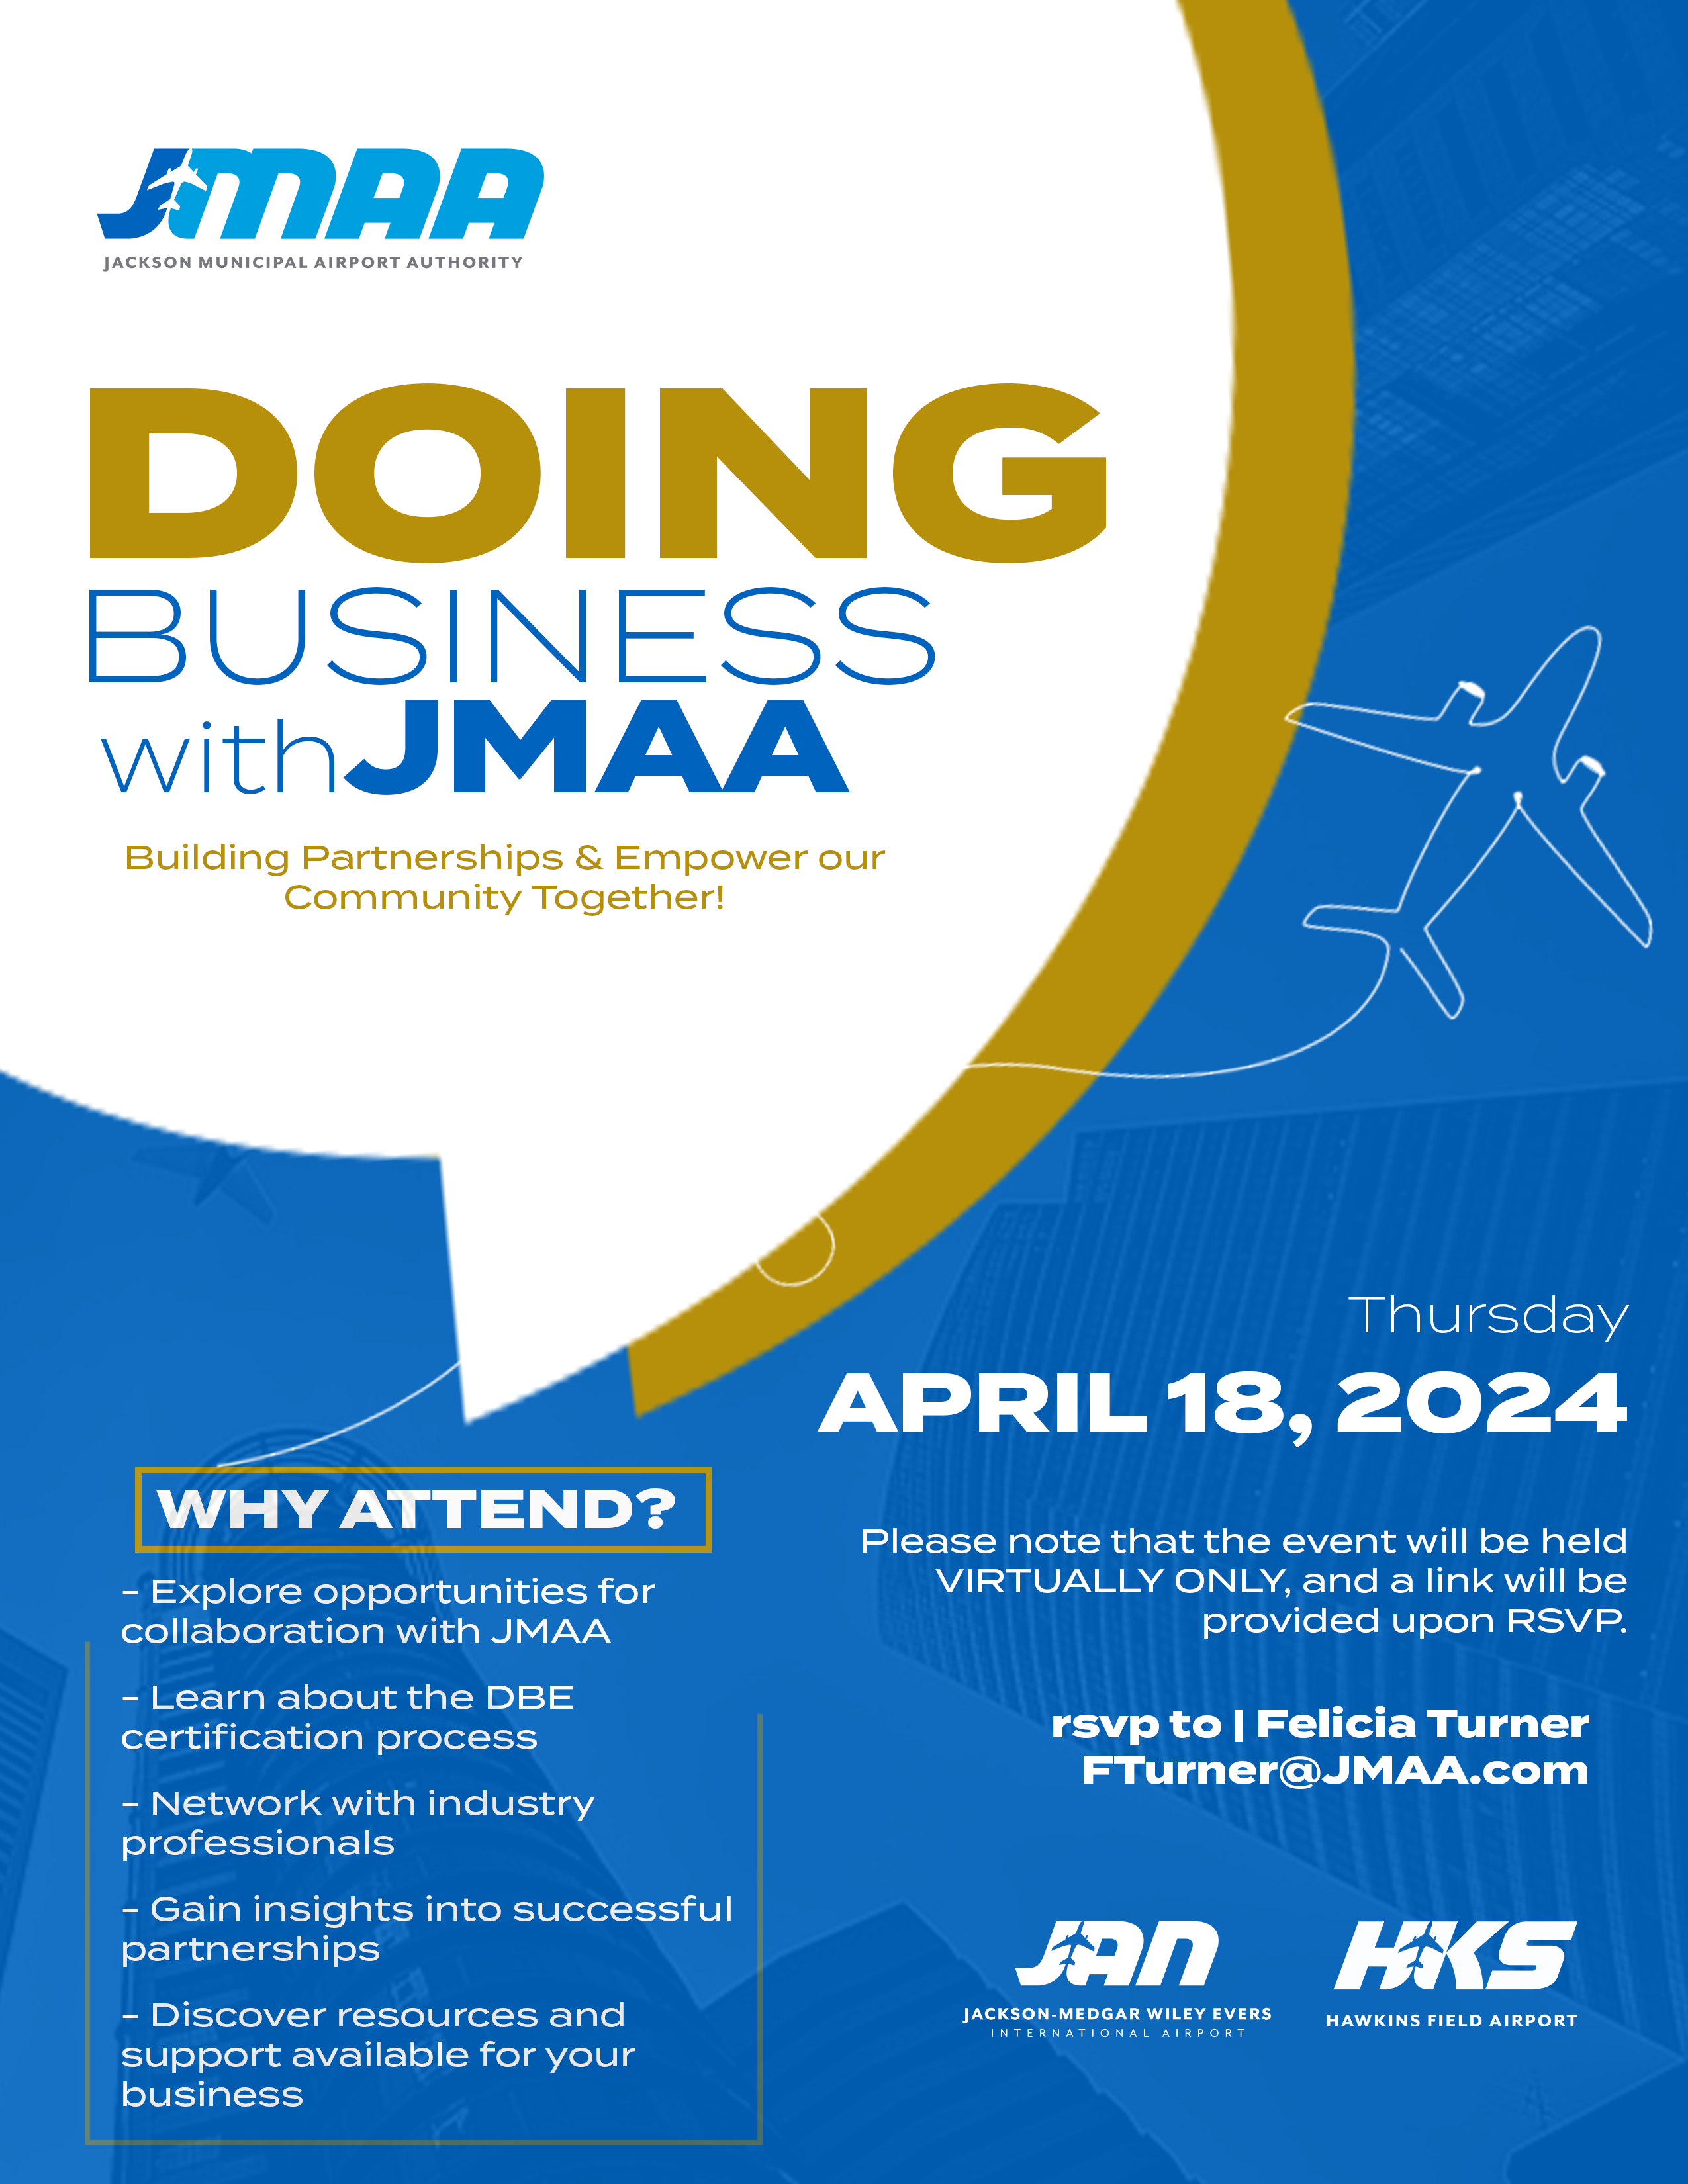 Doing Business with JMAA Virtual Event